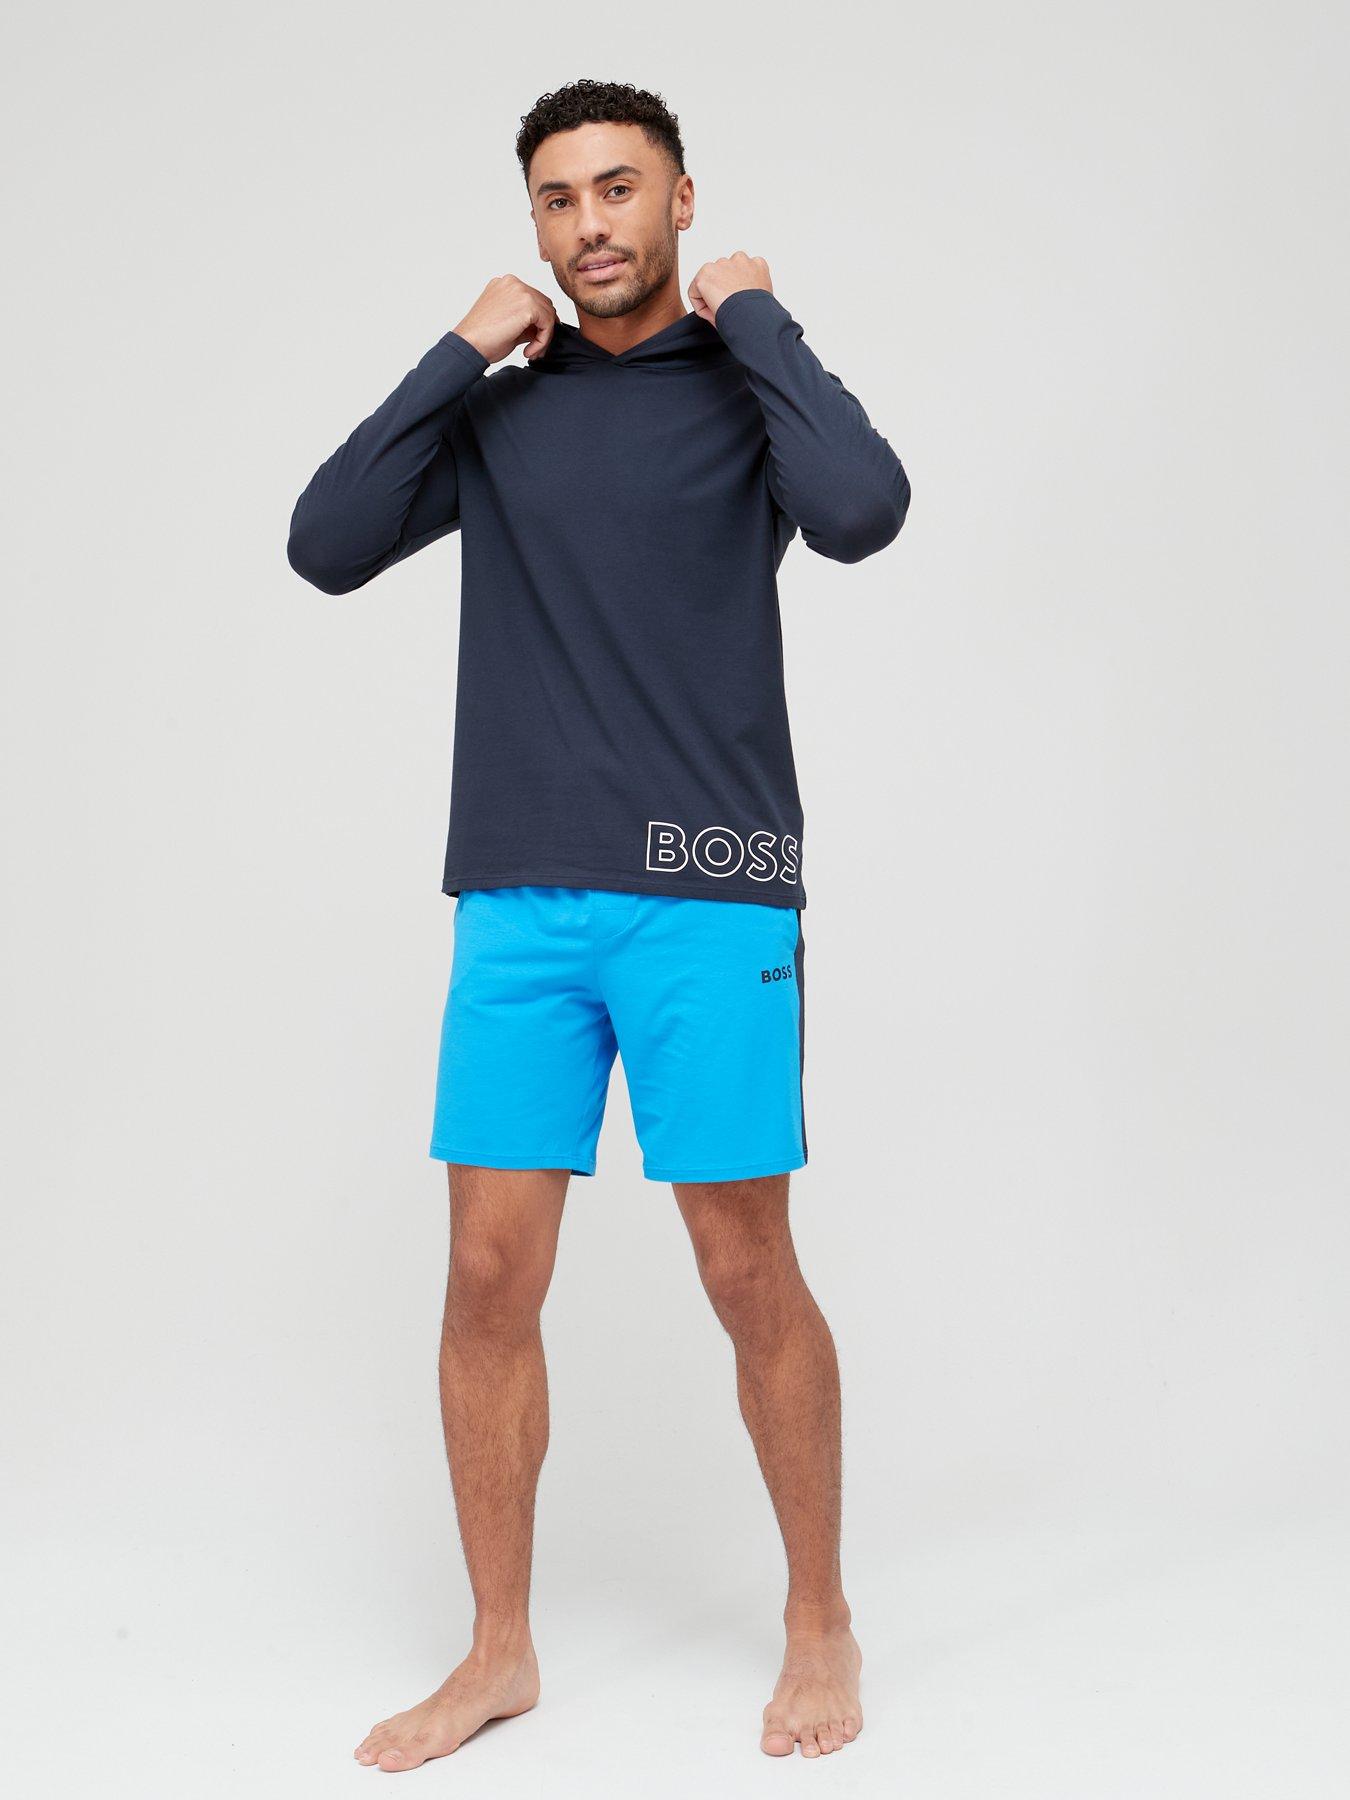  Bodywear Lounge Shorts - Blue